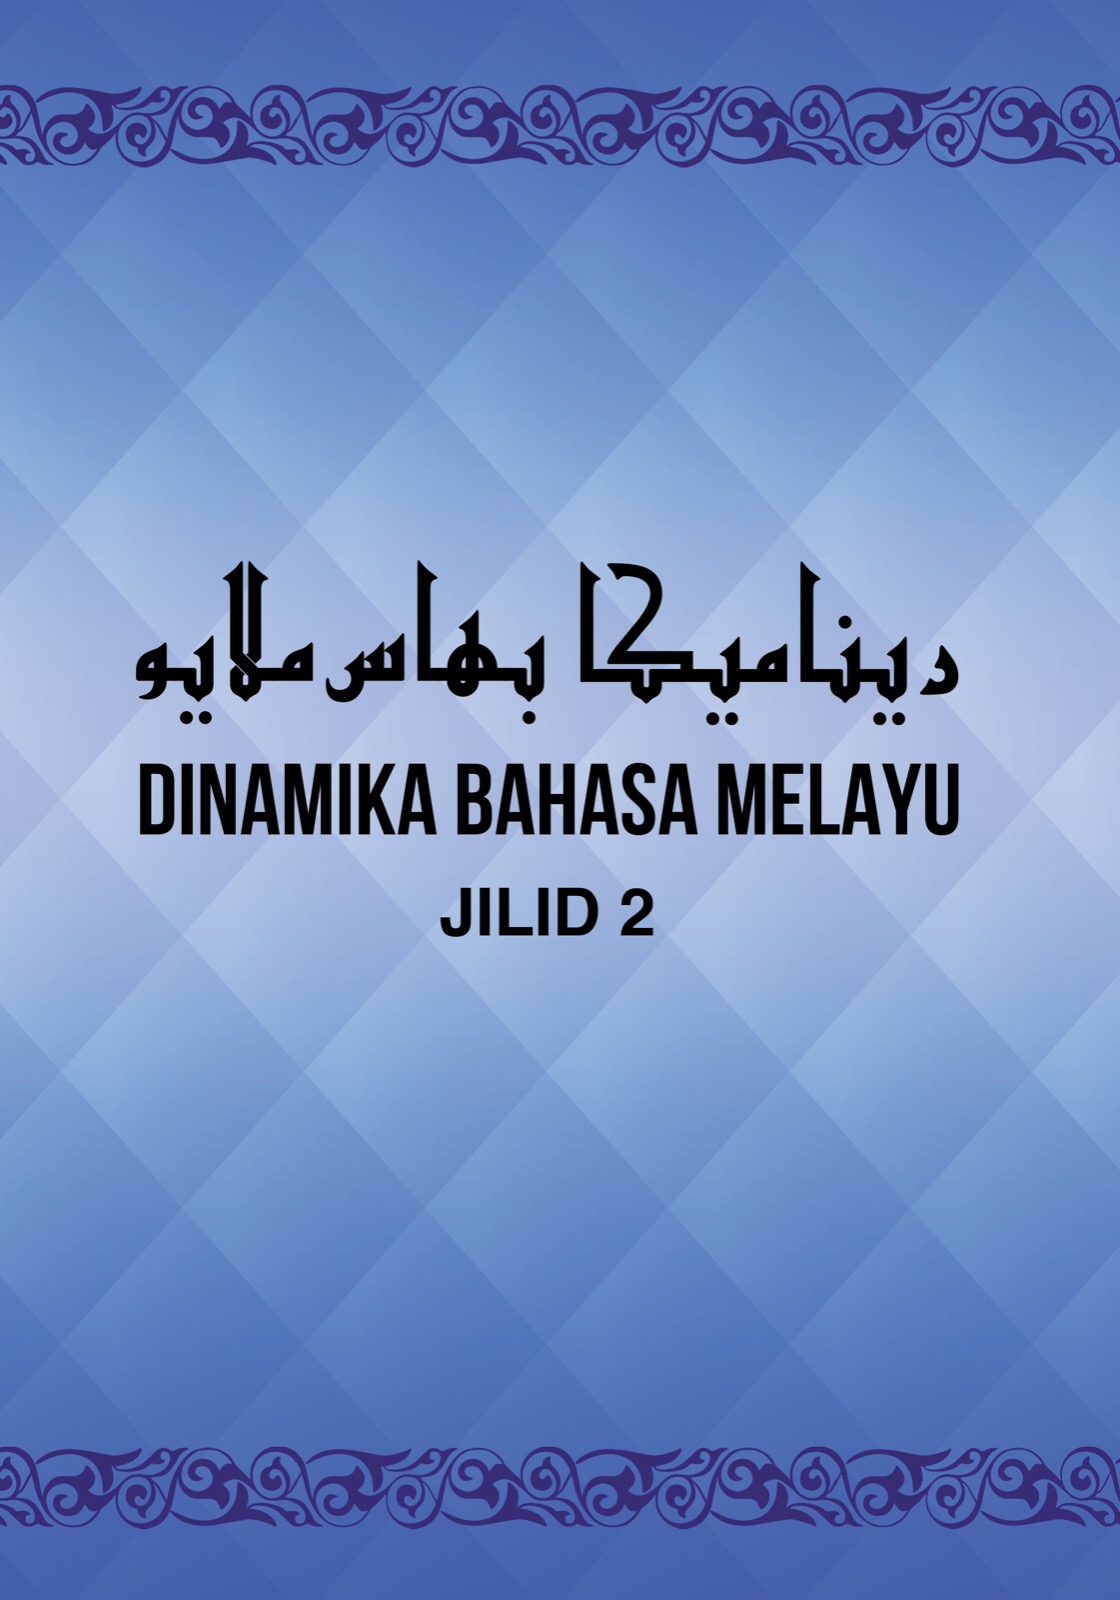 Dinamika Bahasa Melayu Jilid 2.jpeg